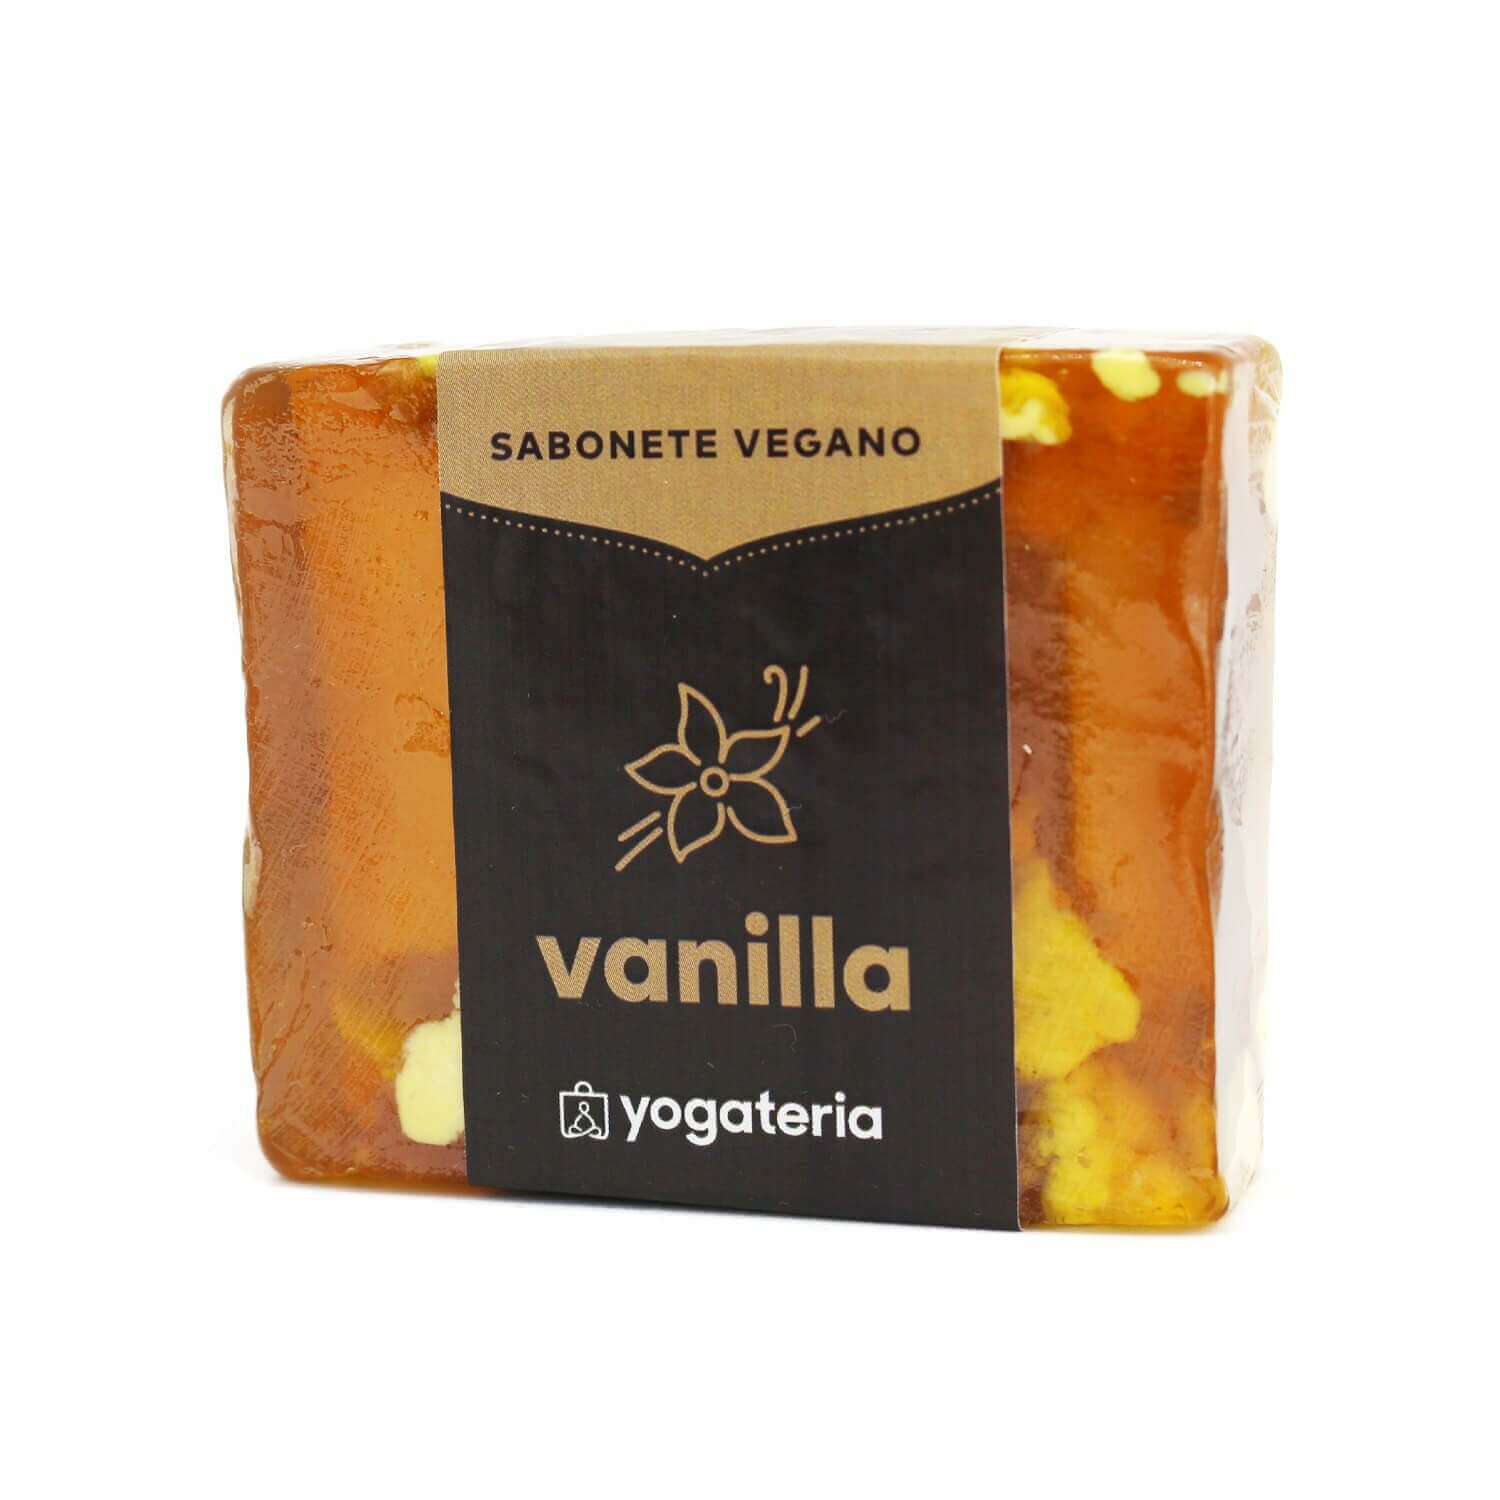 Sabonete Vegano Vanilla 36